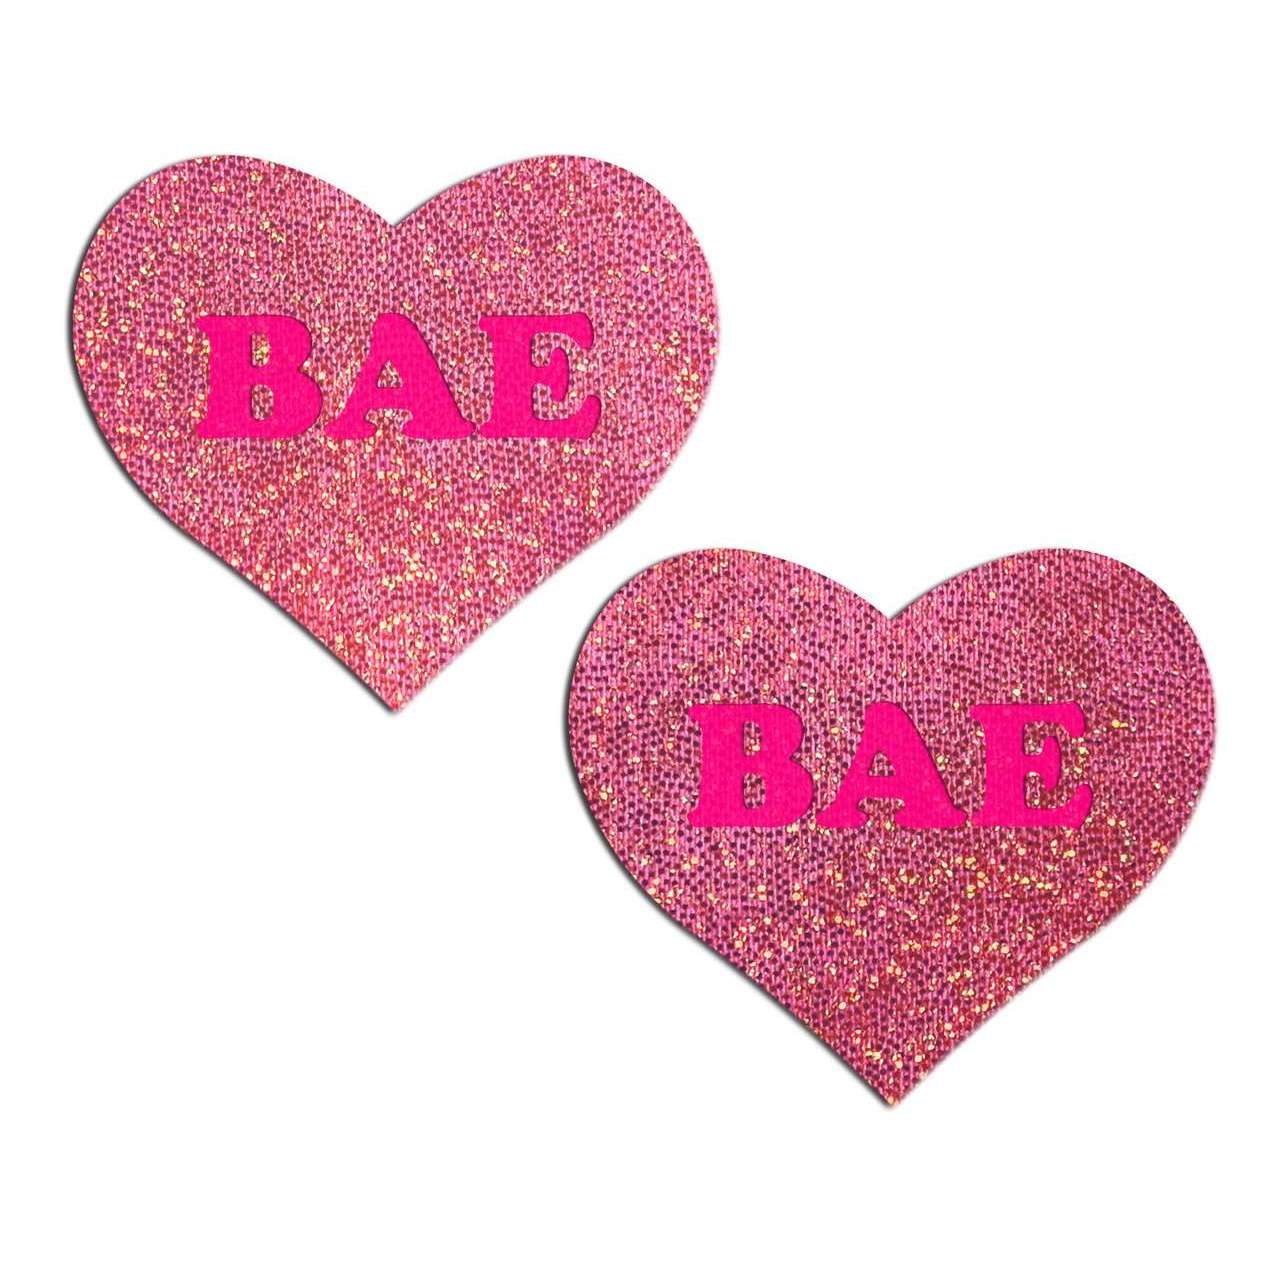 'BAE' in Neon Pink on Pink Glitter Heart Nipple Pasties